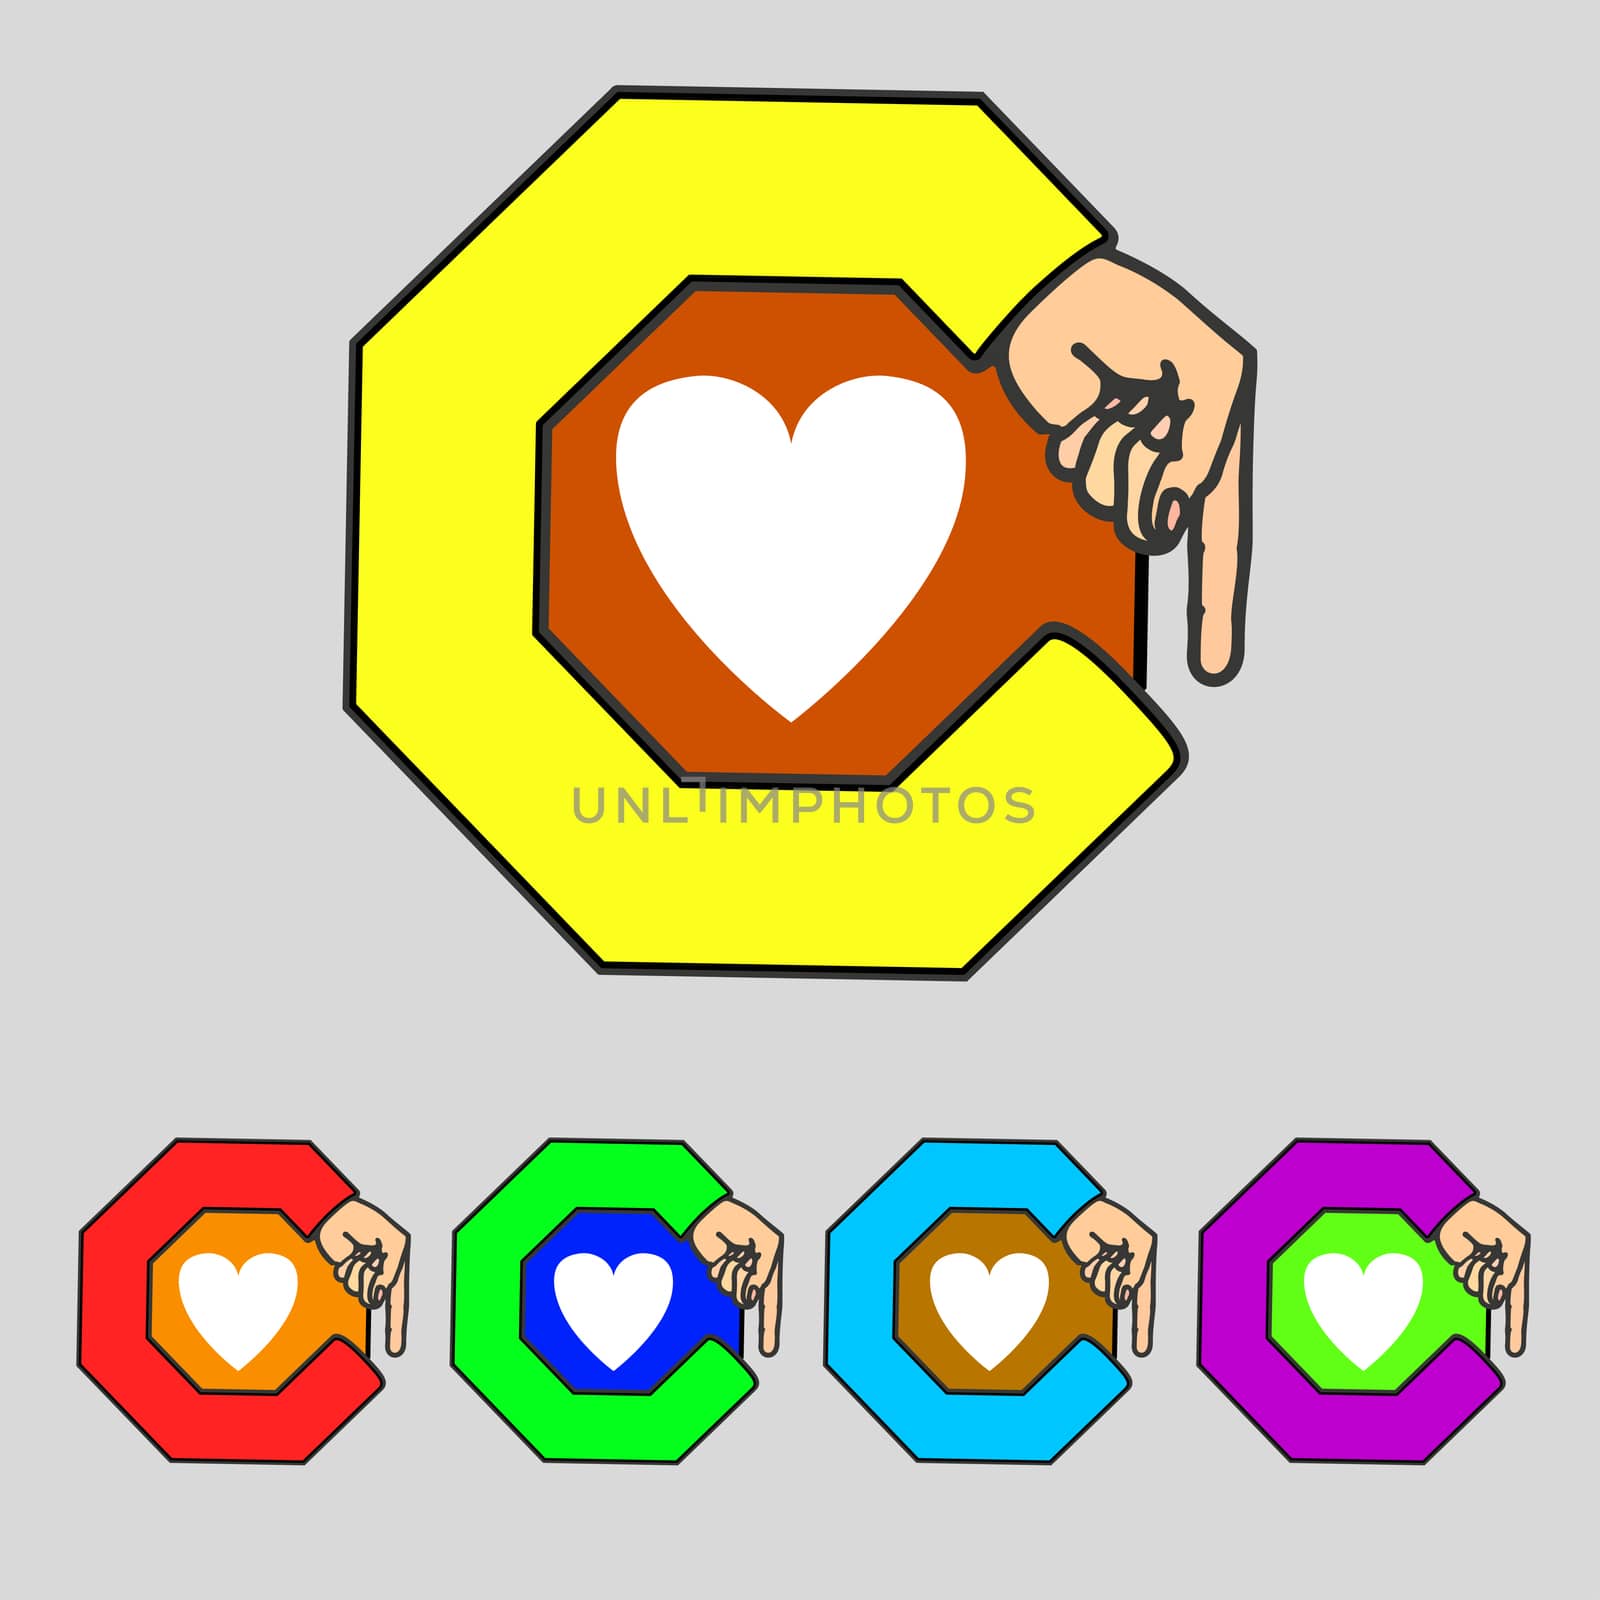 Heart sign icon. Love symbol. Set colur buttons. illustration